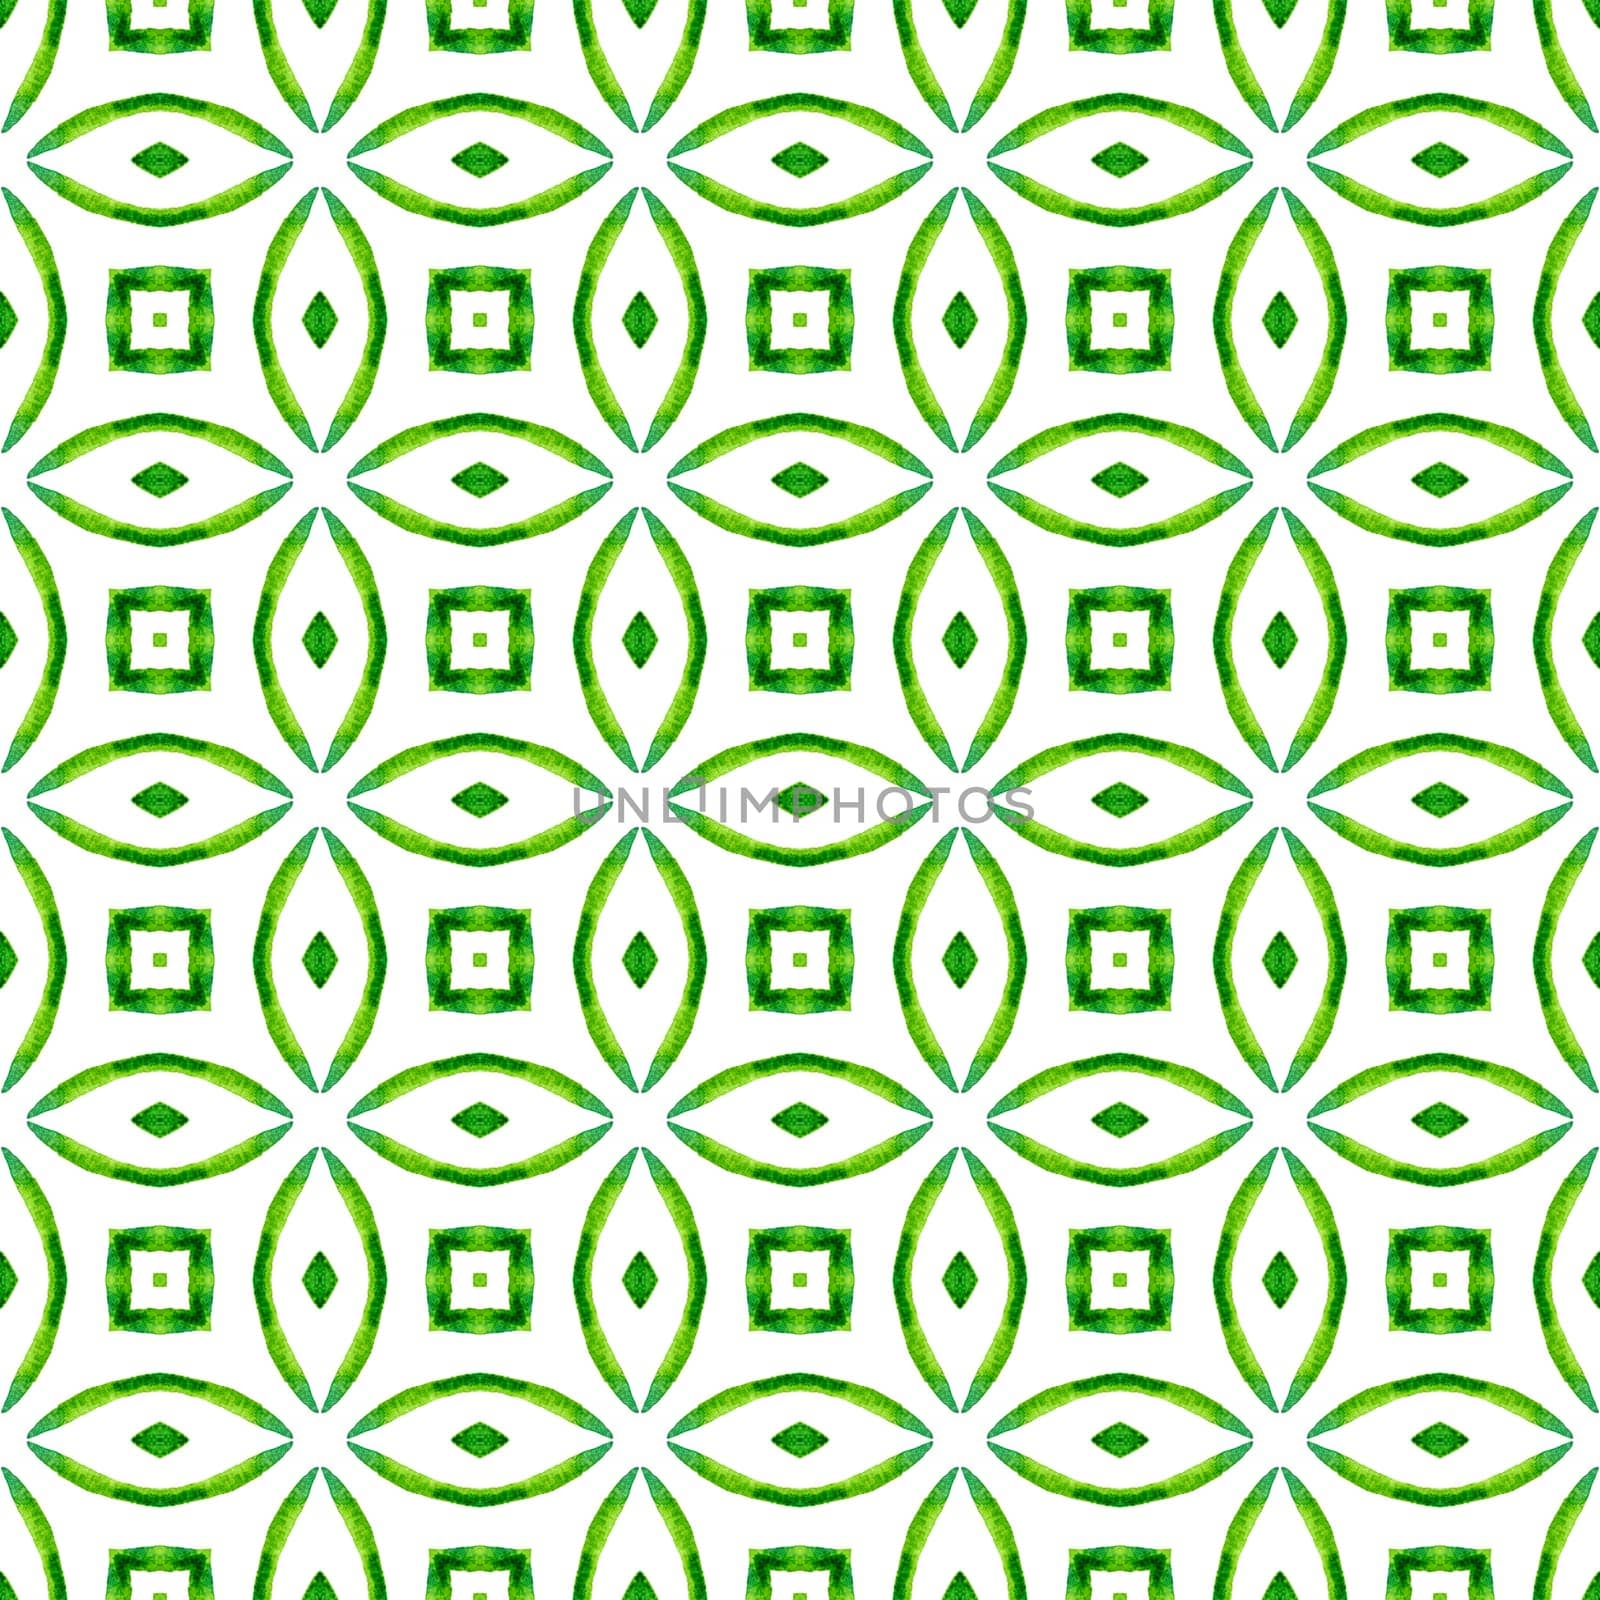 Medallion seamless pattern. Green artistic boho by beginagain